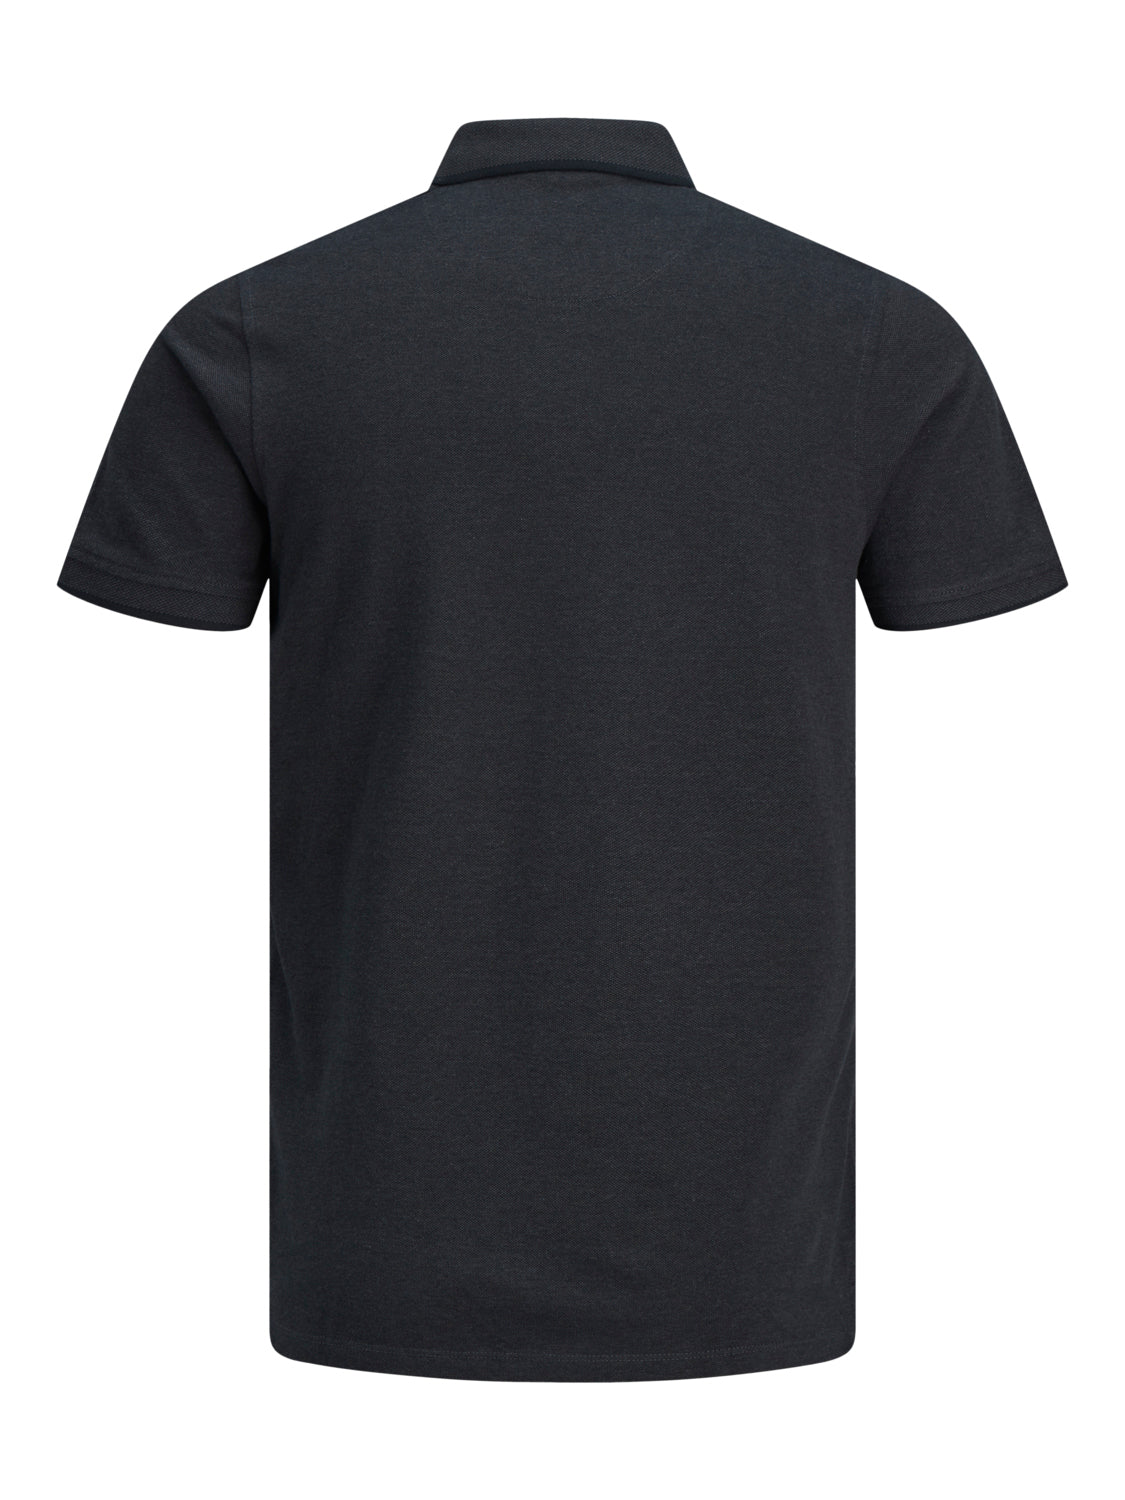 JJEPAULOS Polo Shirt - dark grey melange